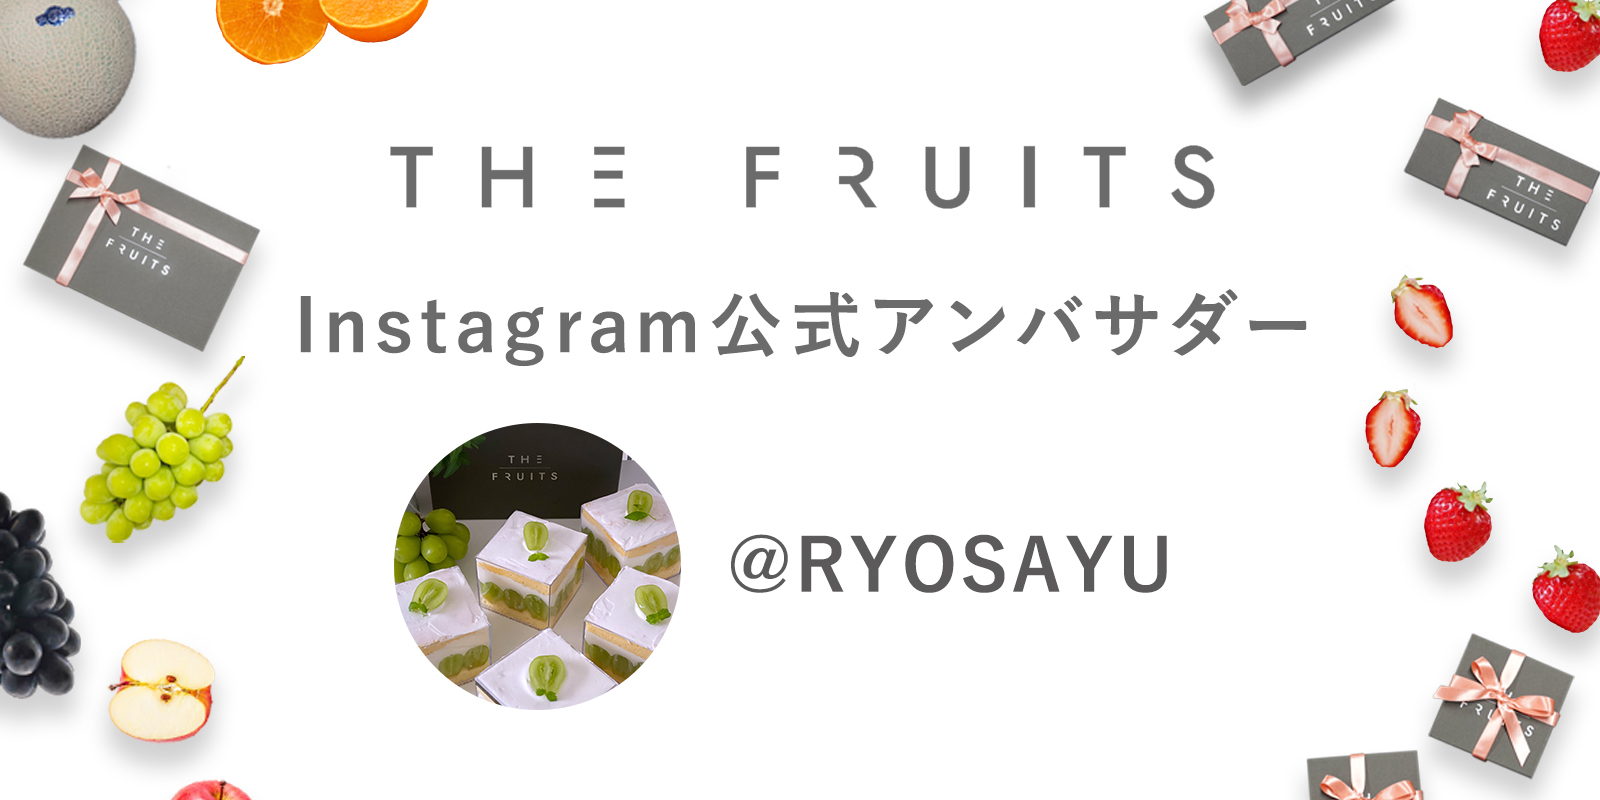 THE FRUITS公式アンバサダー就任のお知らせ　@ryosayuのイメージ